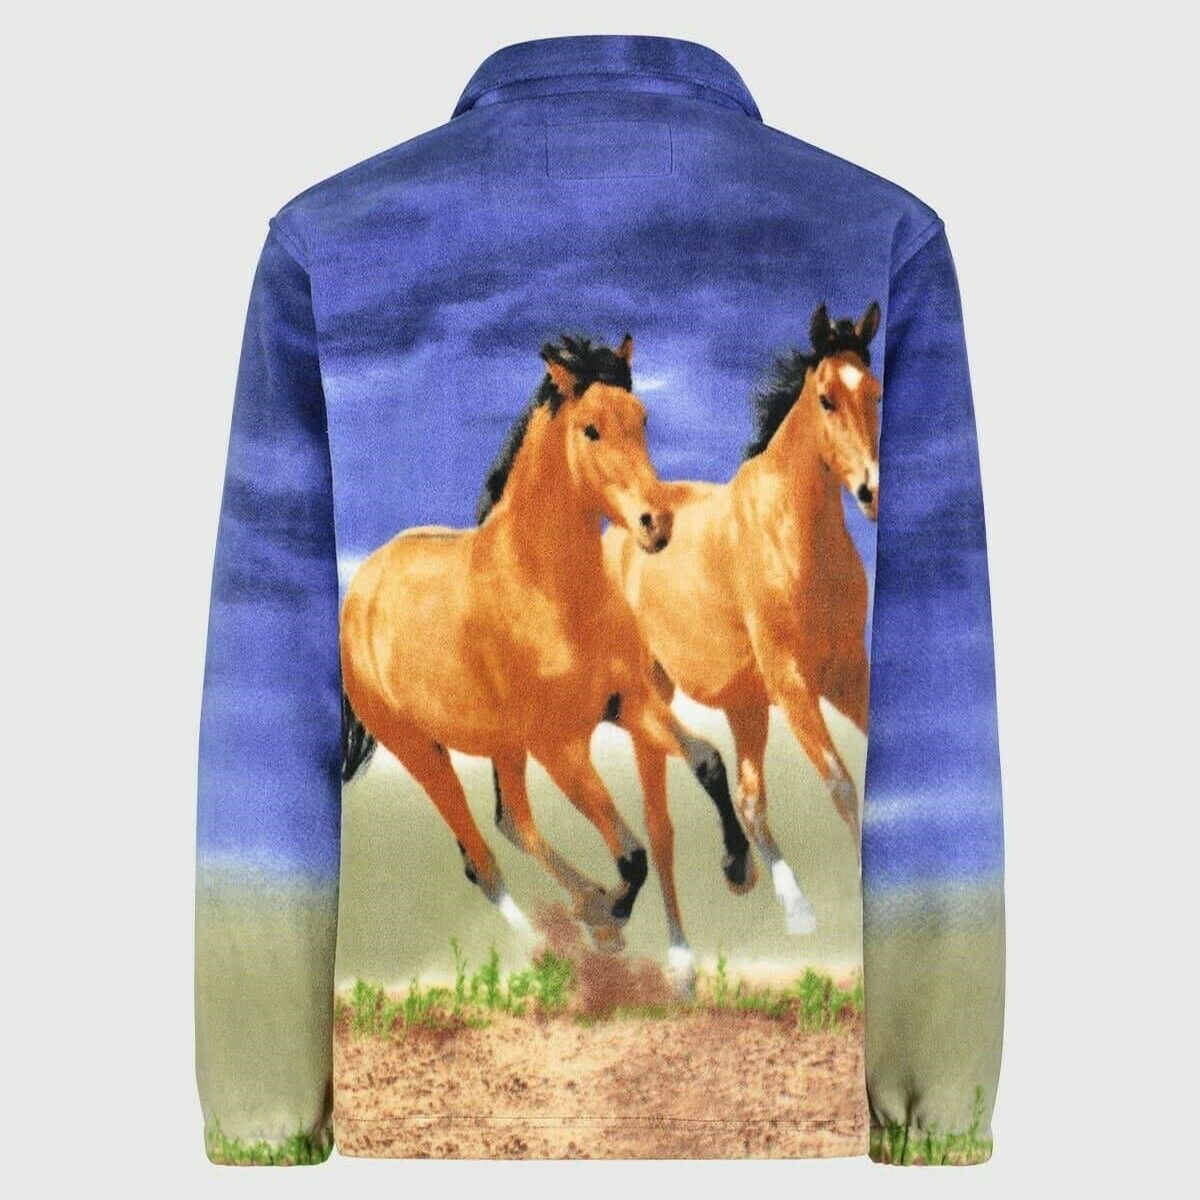 Wild Kind Kids Cozy Fleece Horses On The Go Sweatshirt 26191-066